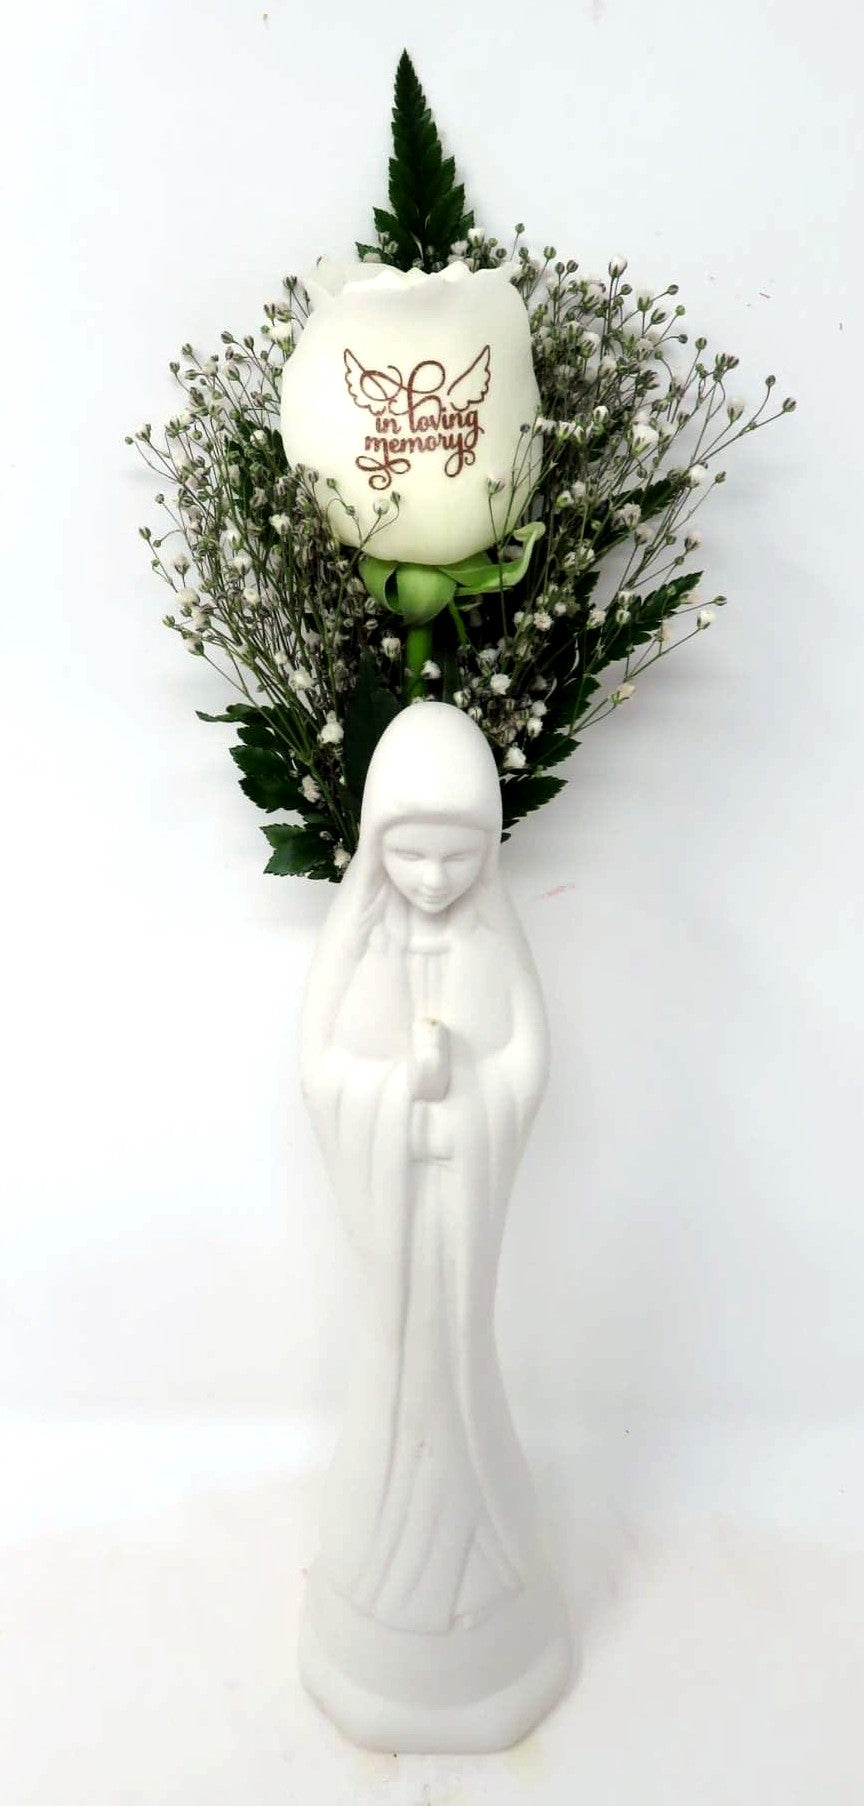 Single White Rose "In Loving Memory" with Madonna Vase